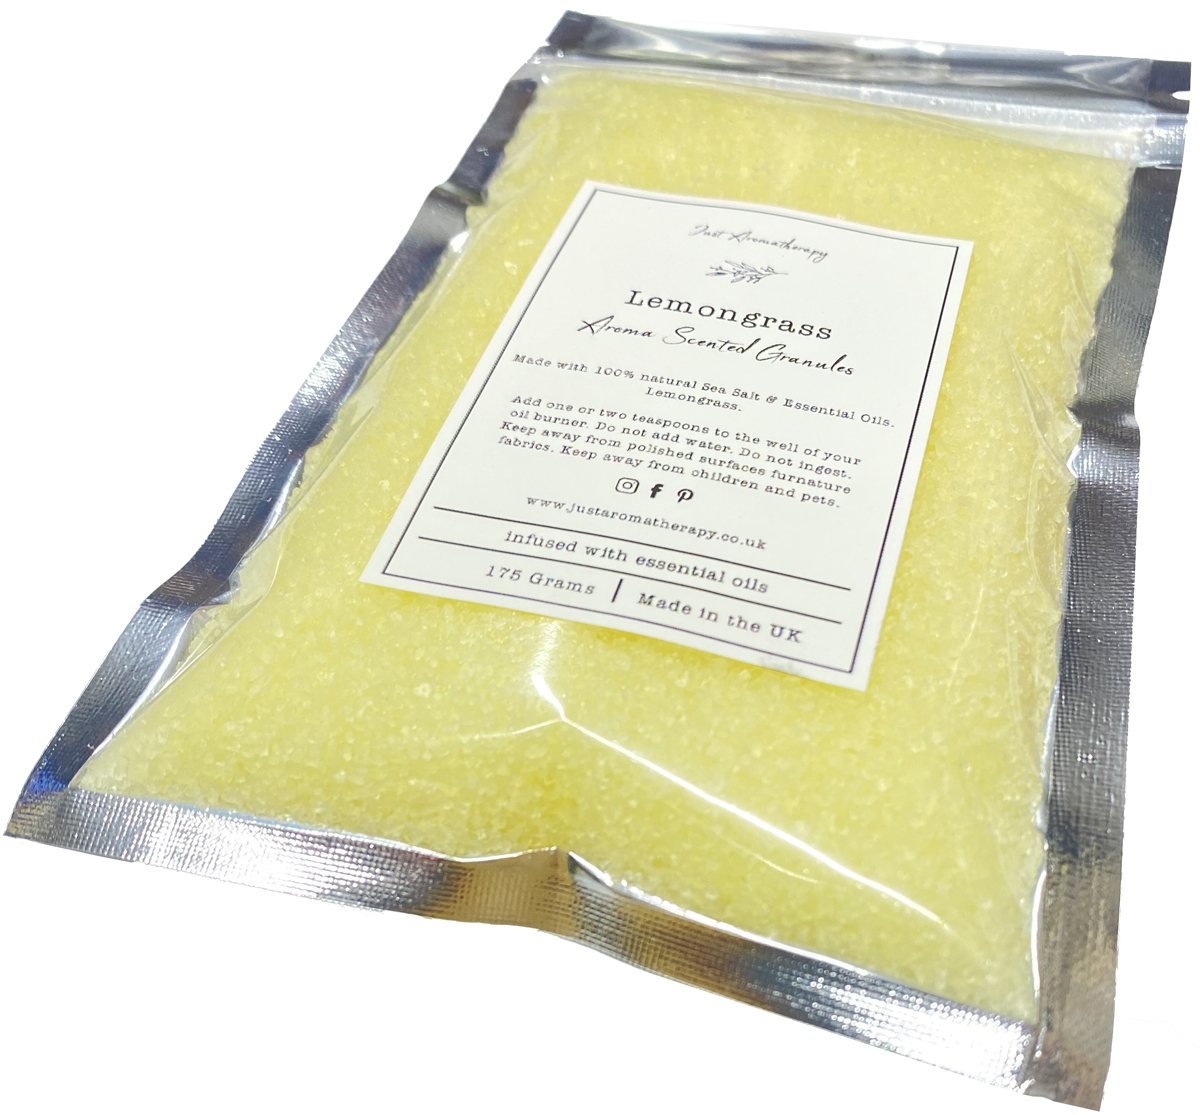 Lemongrass Aromatherapy Simmering granules